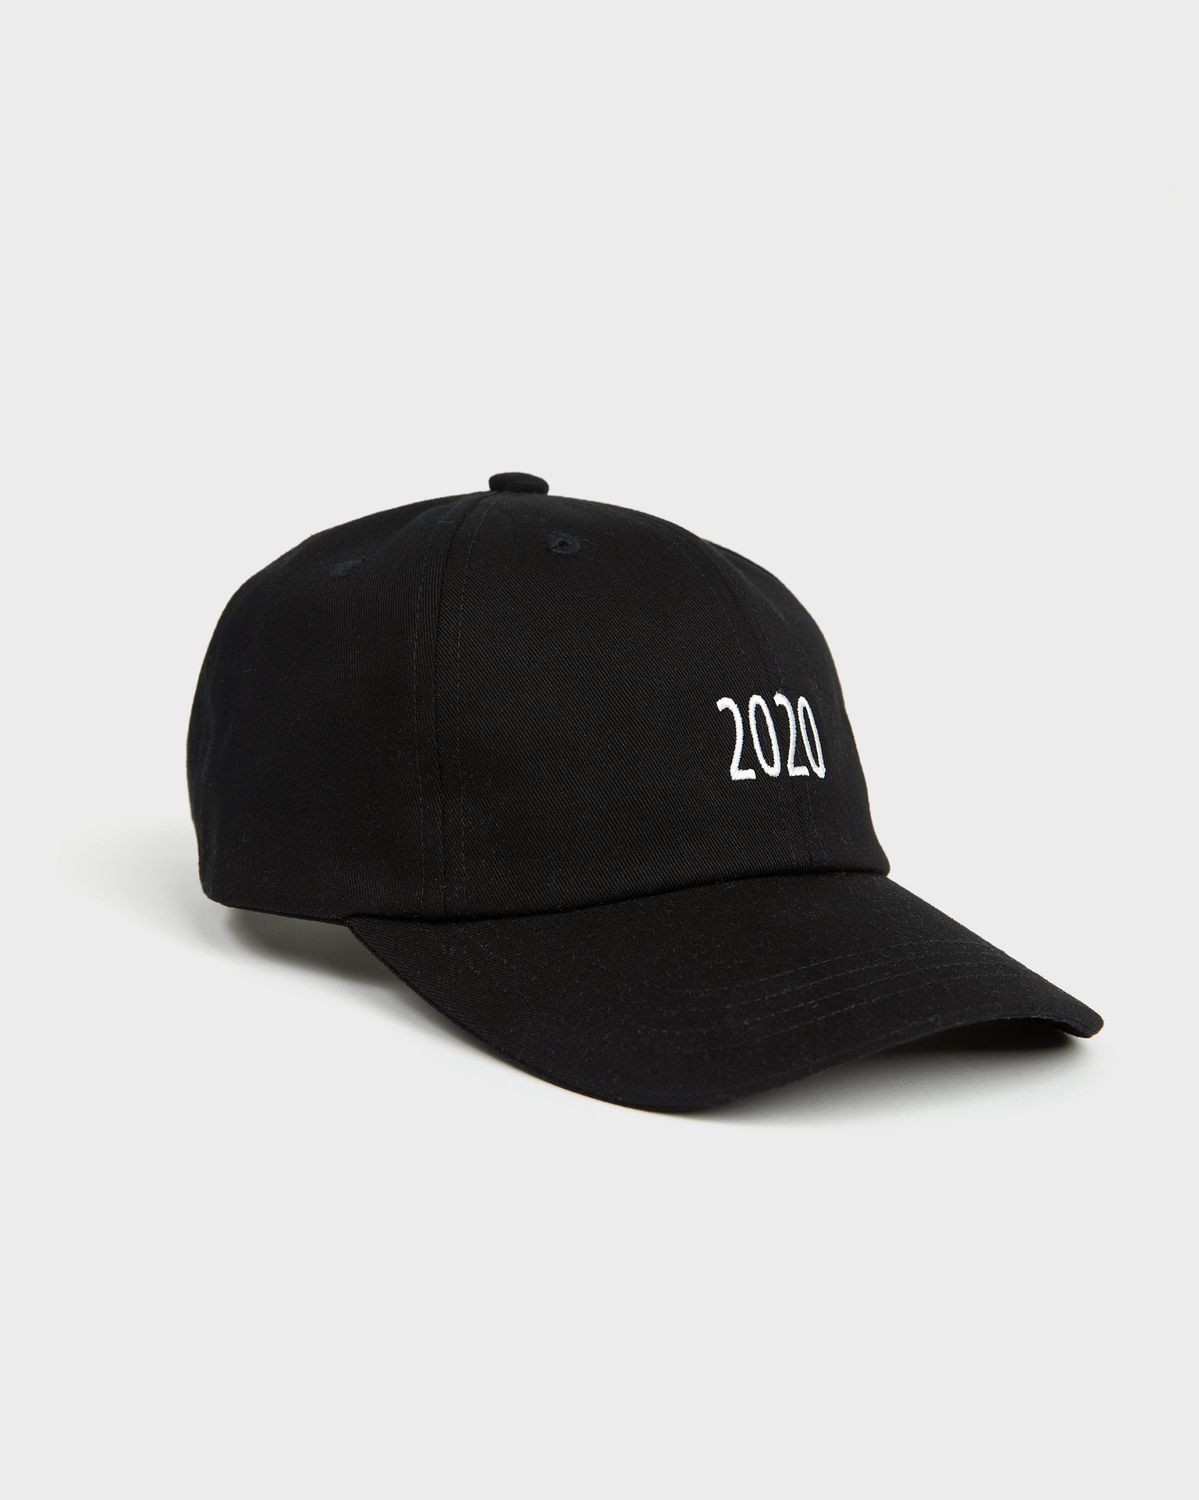 Highsnobiety – This Never Happened 2020 Cap Black - Caps - Black - Image 1